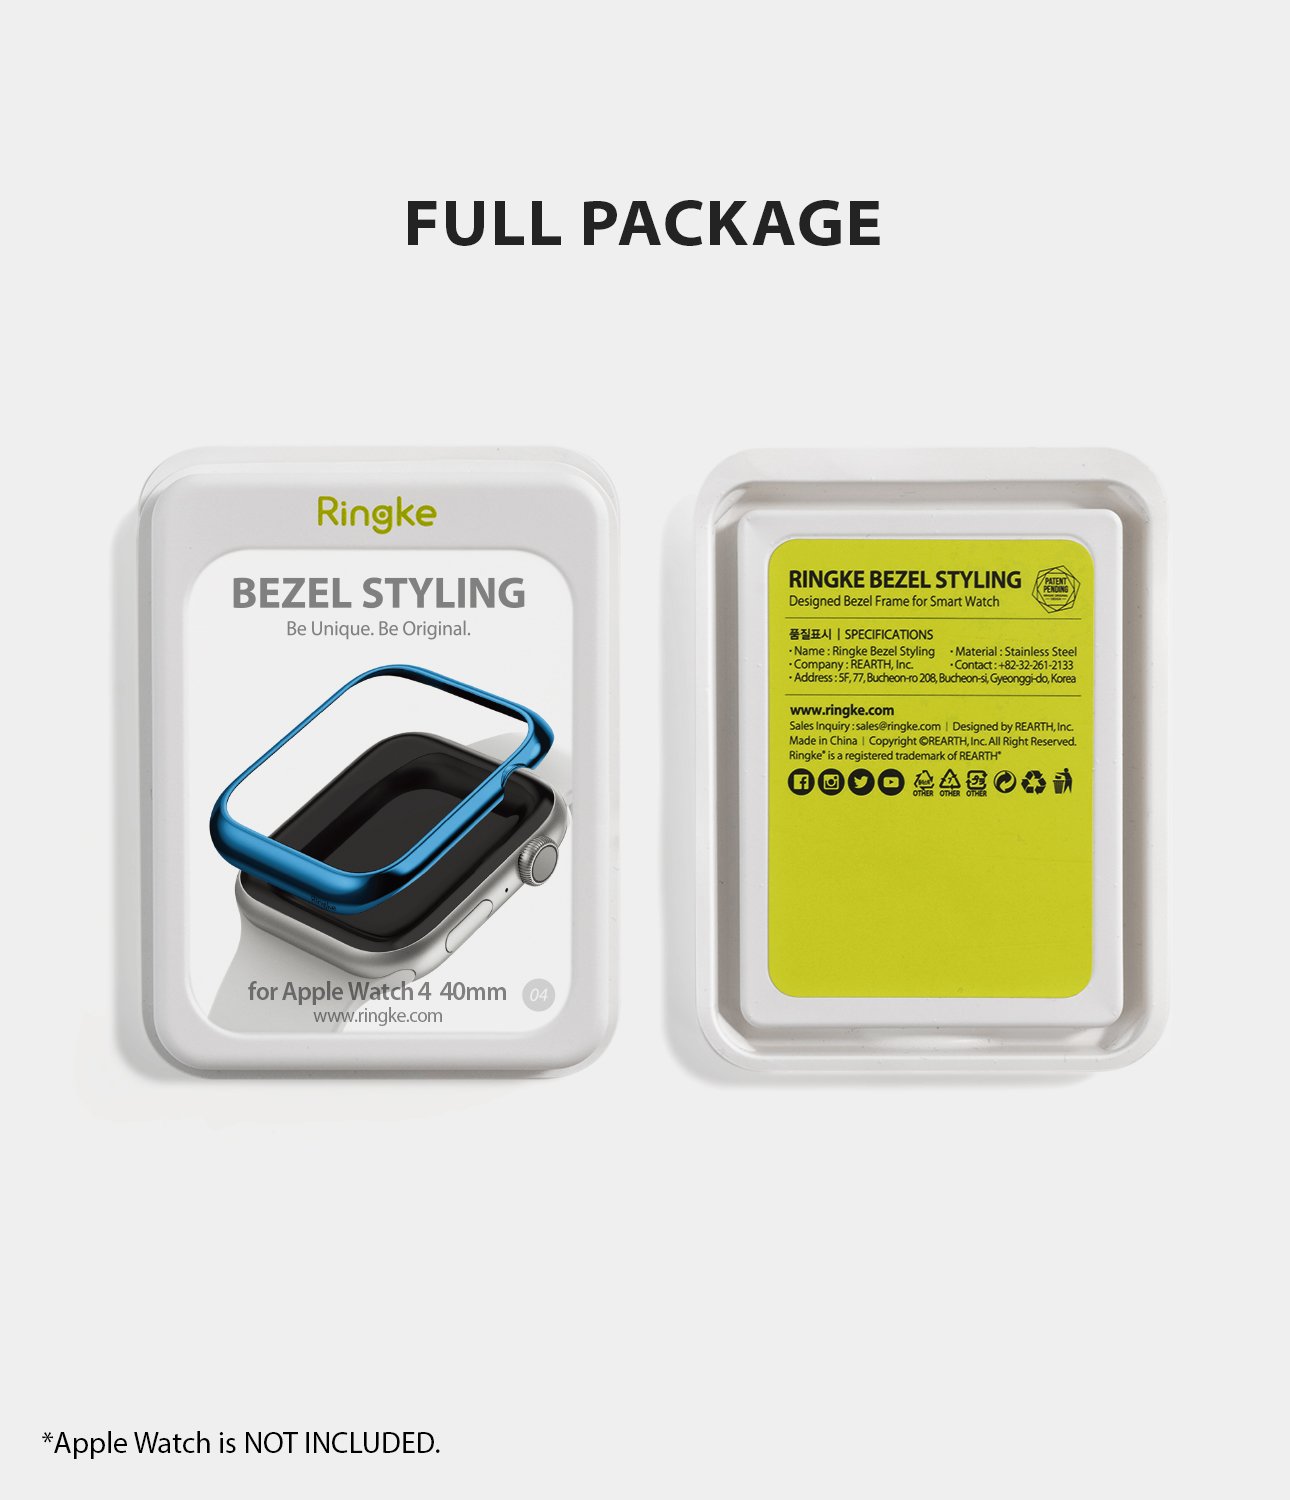 ringke bezel styling 40-04 glossy blue stainless steel on apple watch series 6 / 5 / 4 / SE 40mm full package